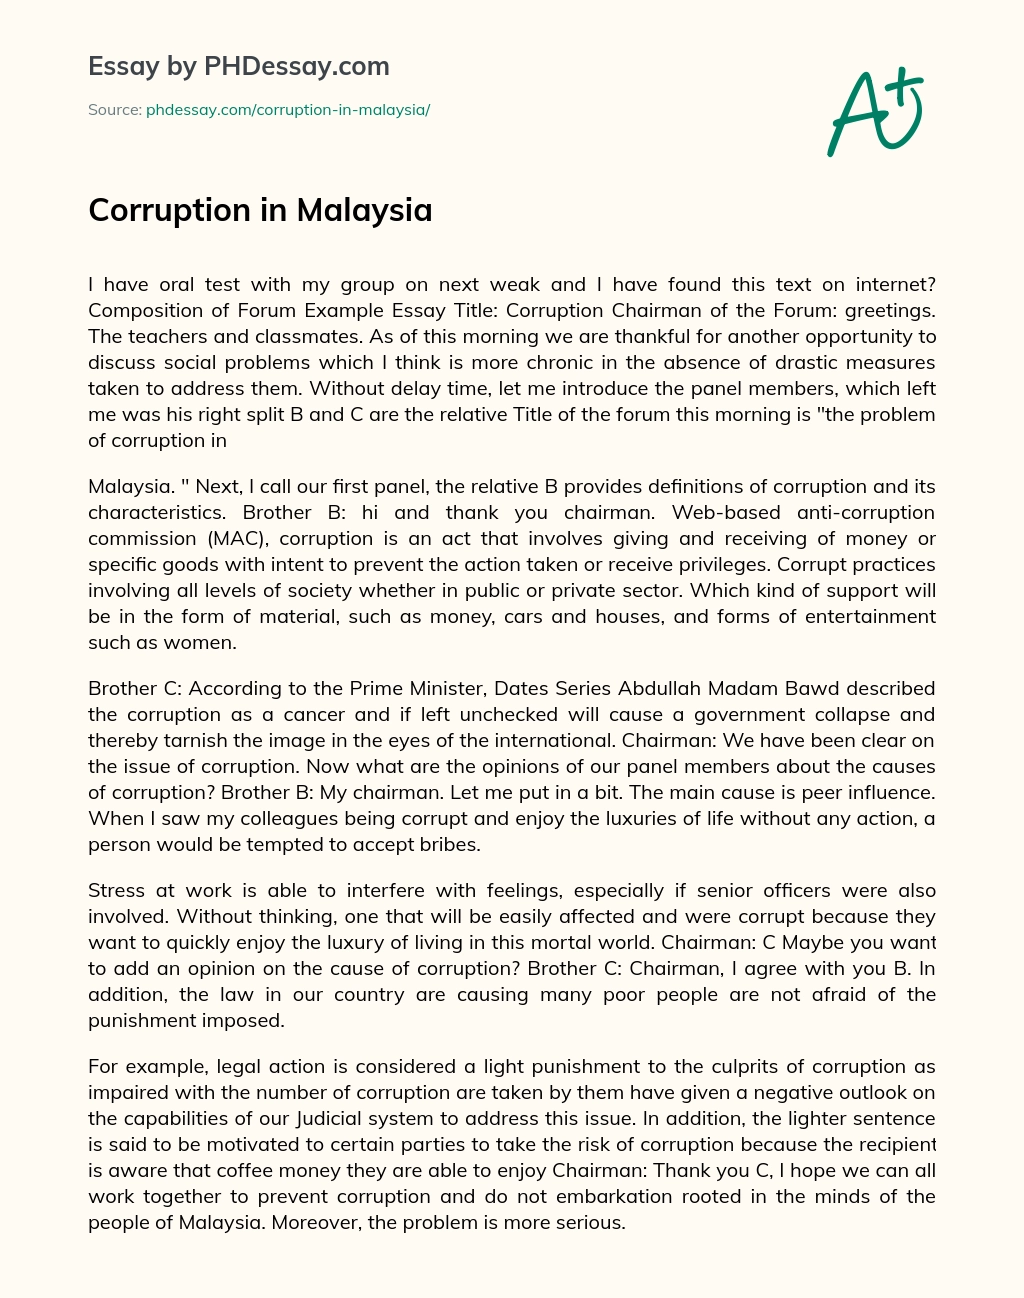 Corruption in Malaysia essay